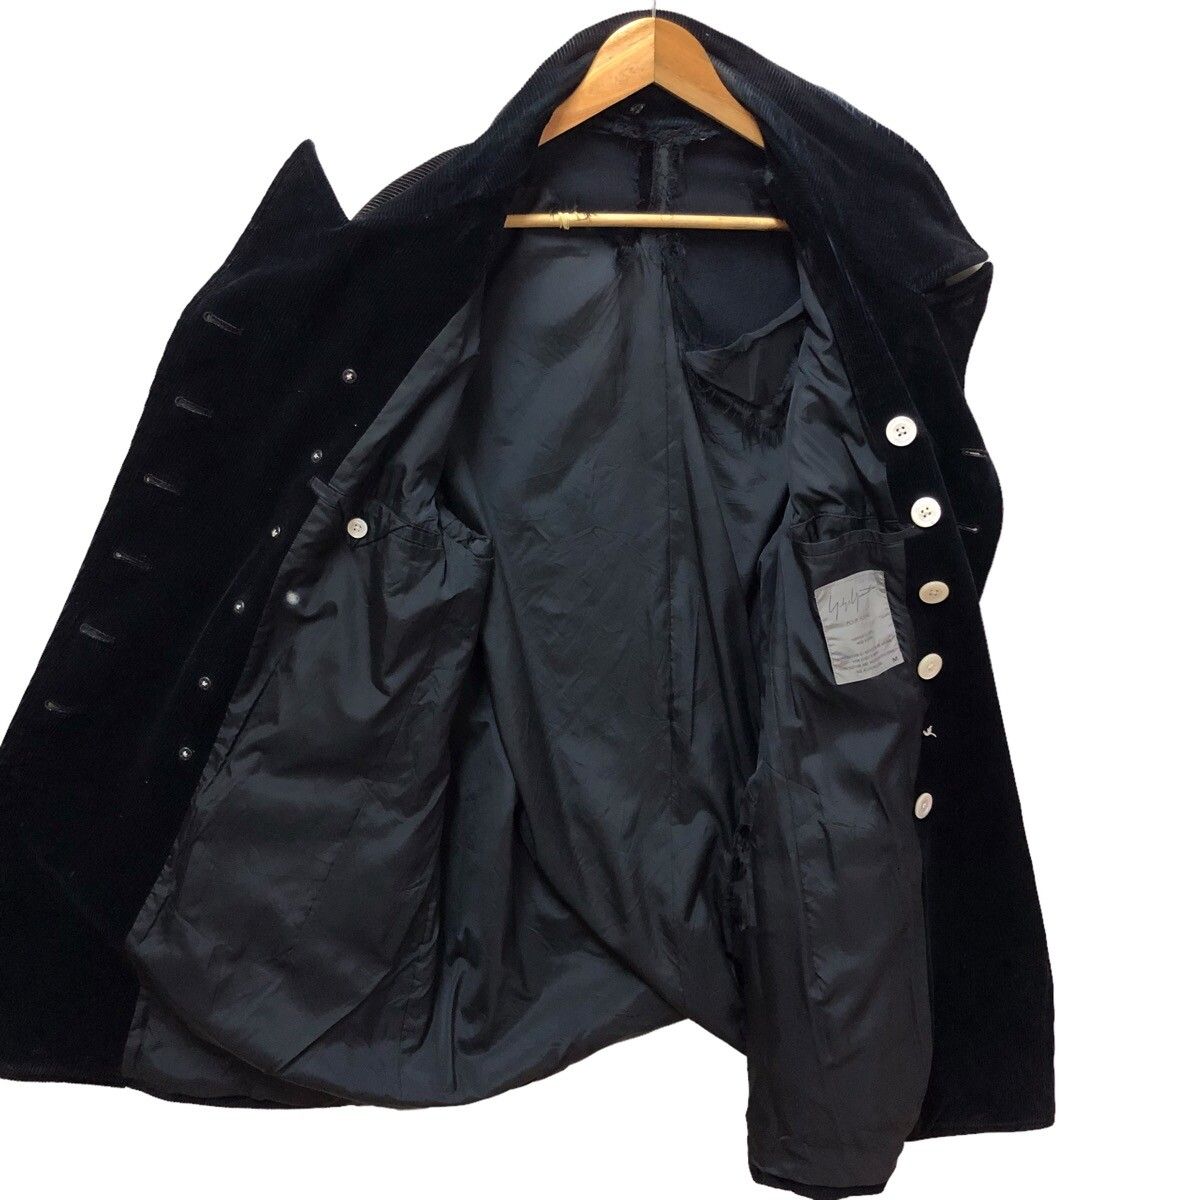 Vintage Yohji Yamamoto pour homme distressed curdoroy coat - 5